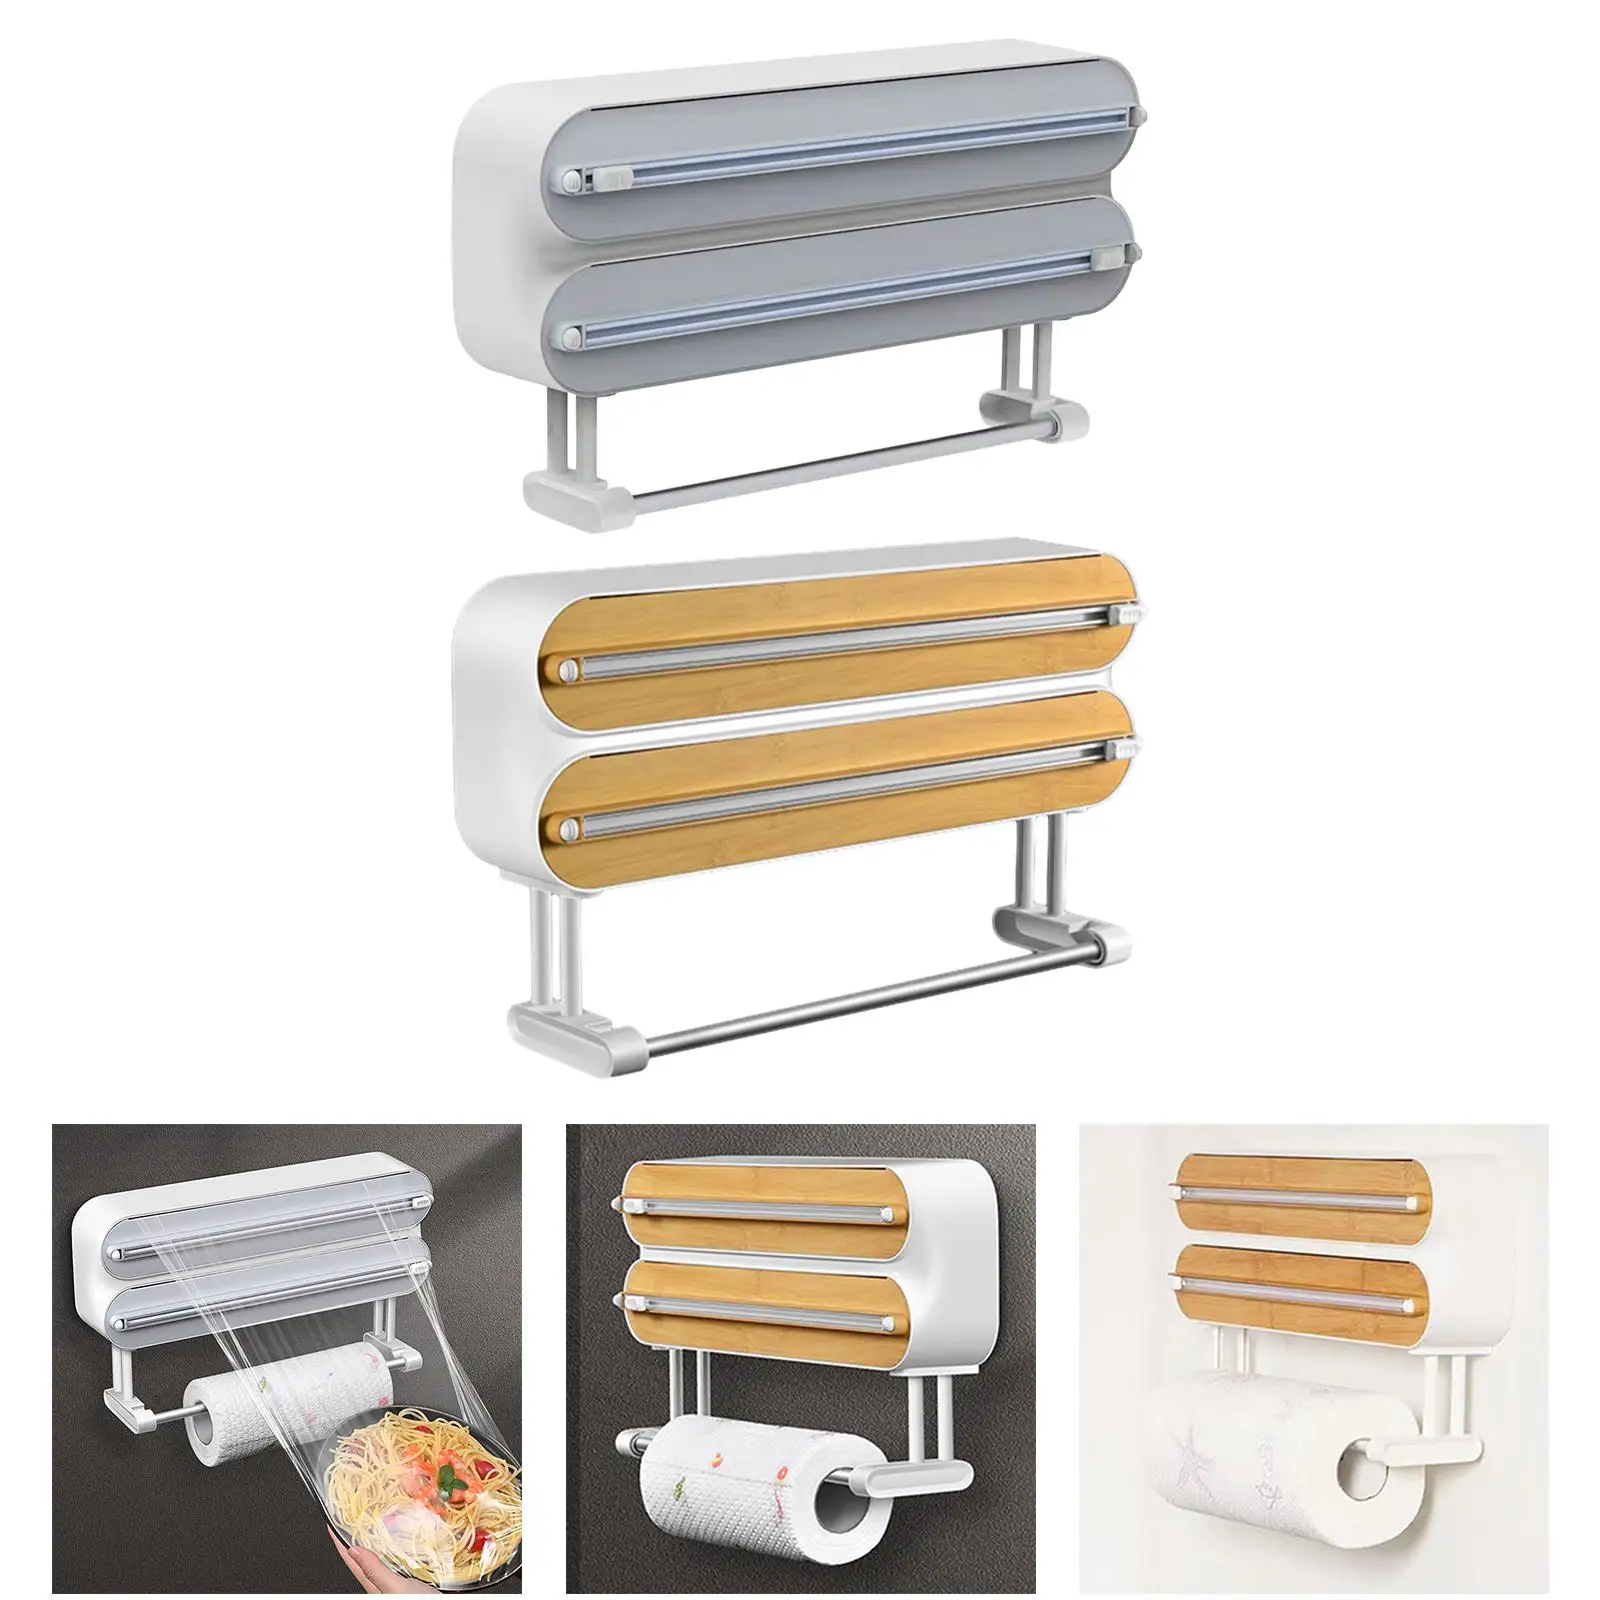 Cling Film Dispenser with Cutter Food Wrap Cutter Slide Cutter Kitchen Roll Paper Holder for Desktop Kitchen Baking Fridge